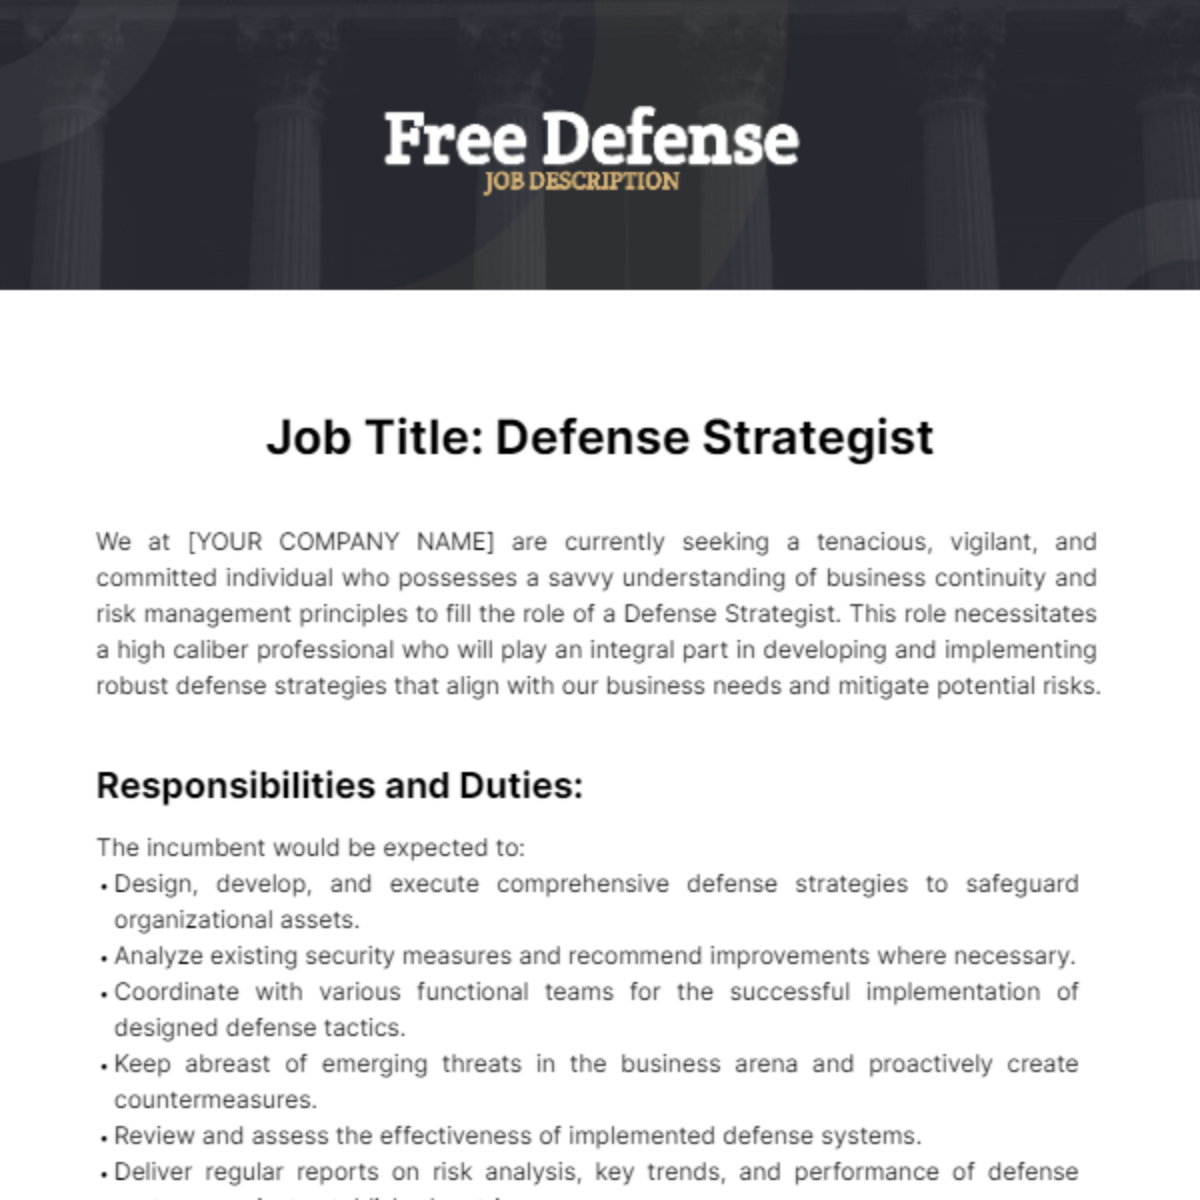 Free Defense Job Description Template